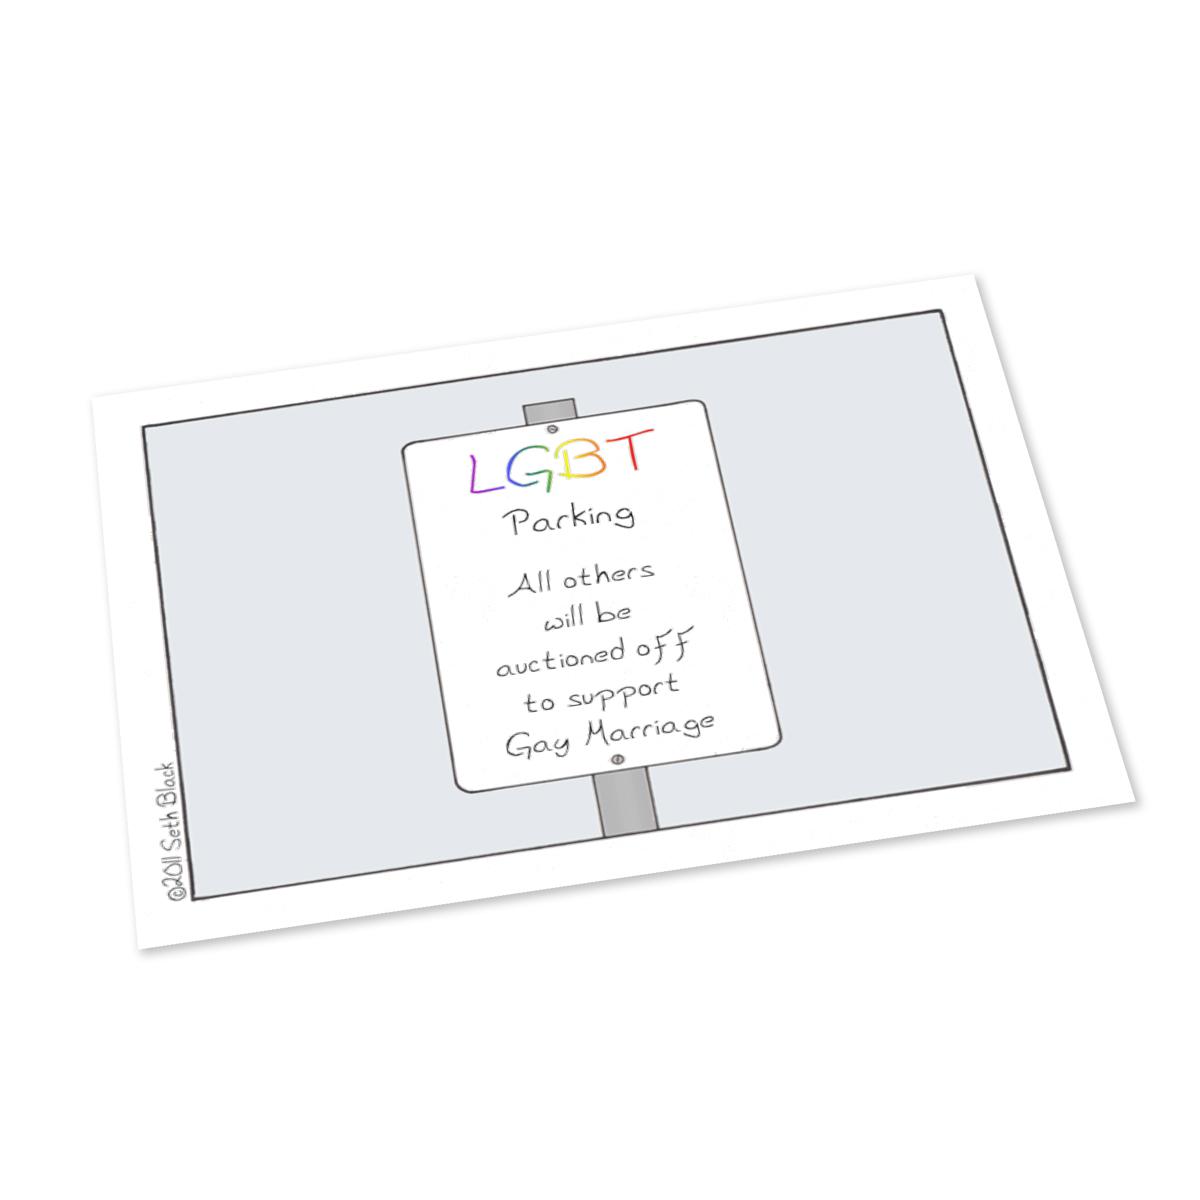 LGBT Parking Sign Postcard 4X6 white